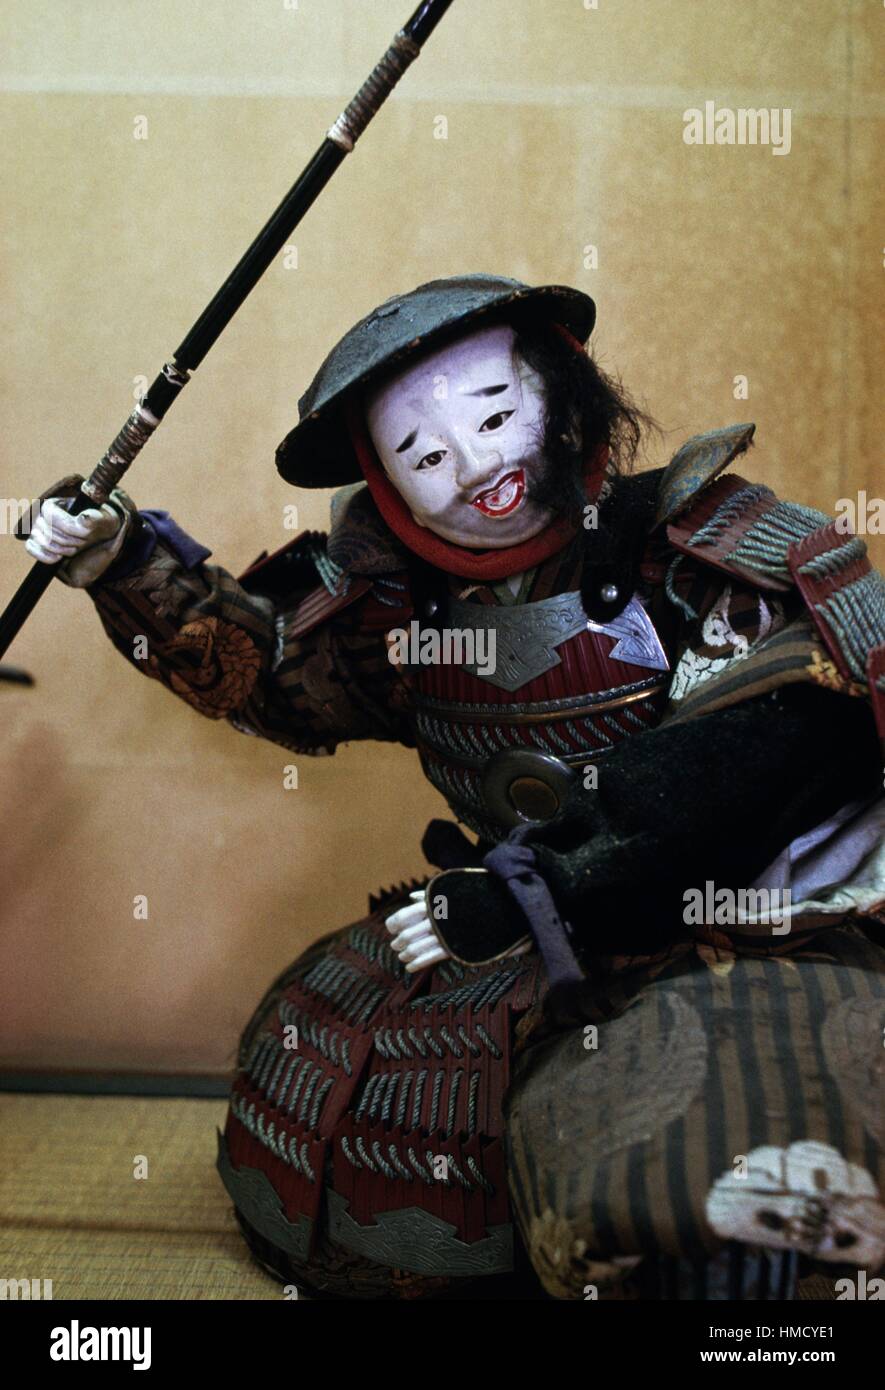 Samurai doll with helmet, weapons and armour, ceramic face, Kurashiki doll museum, Japan. Stock Photo